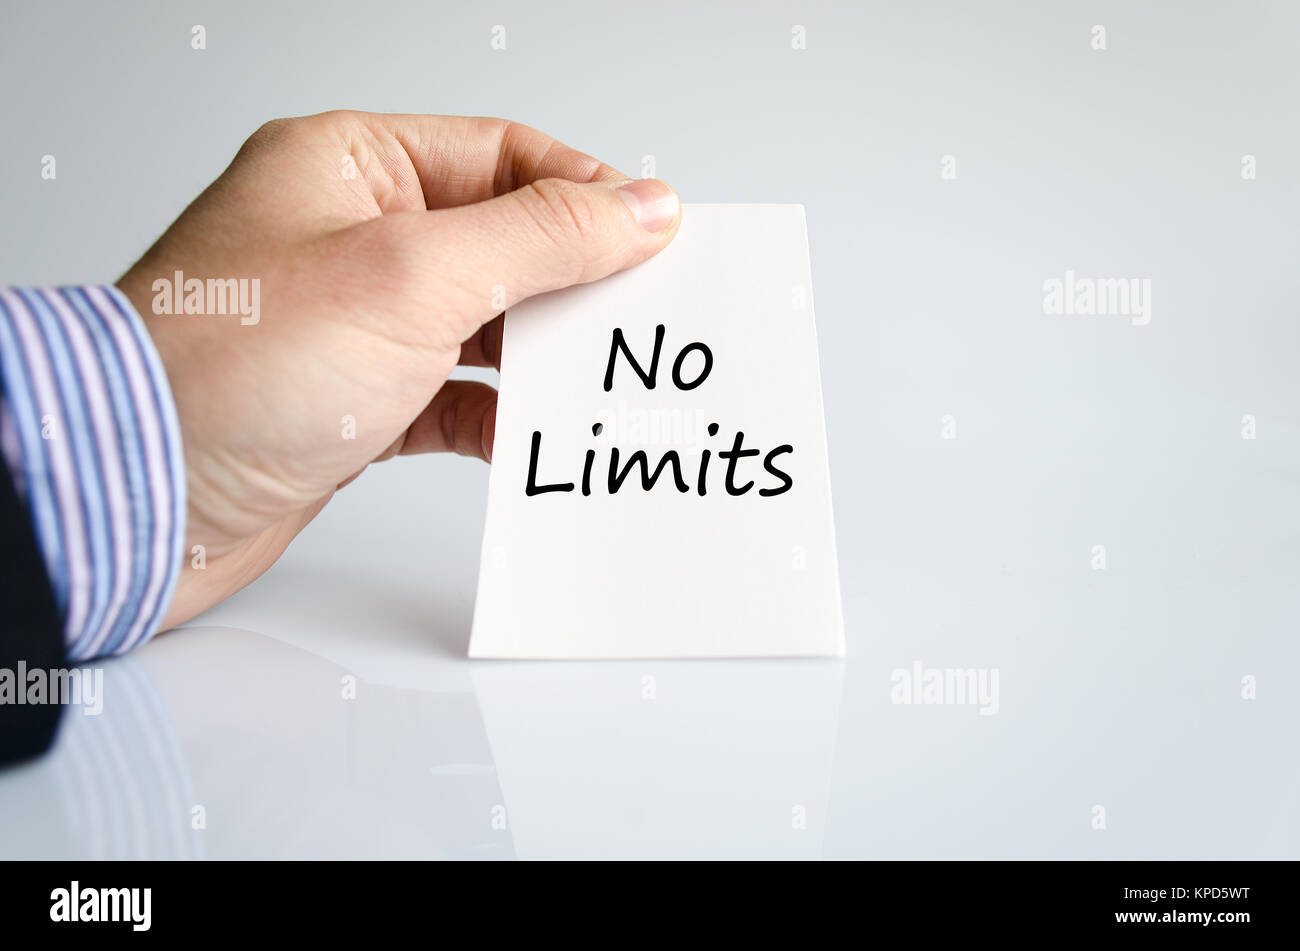 No limits text concept Stock Photo